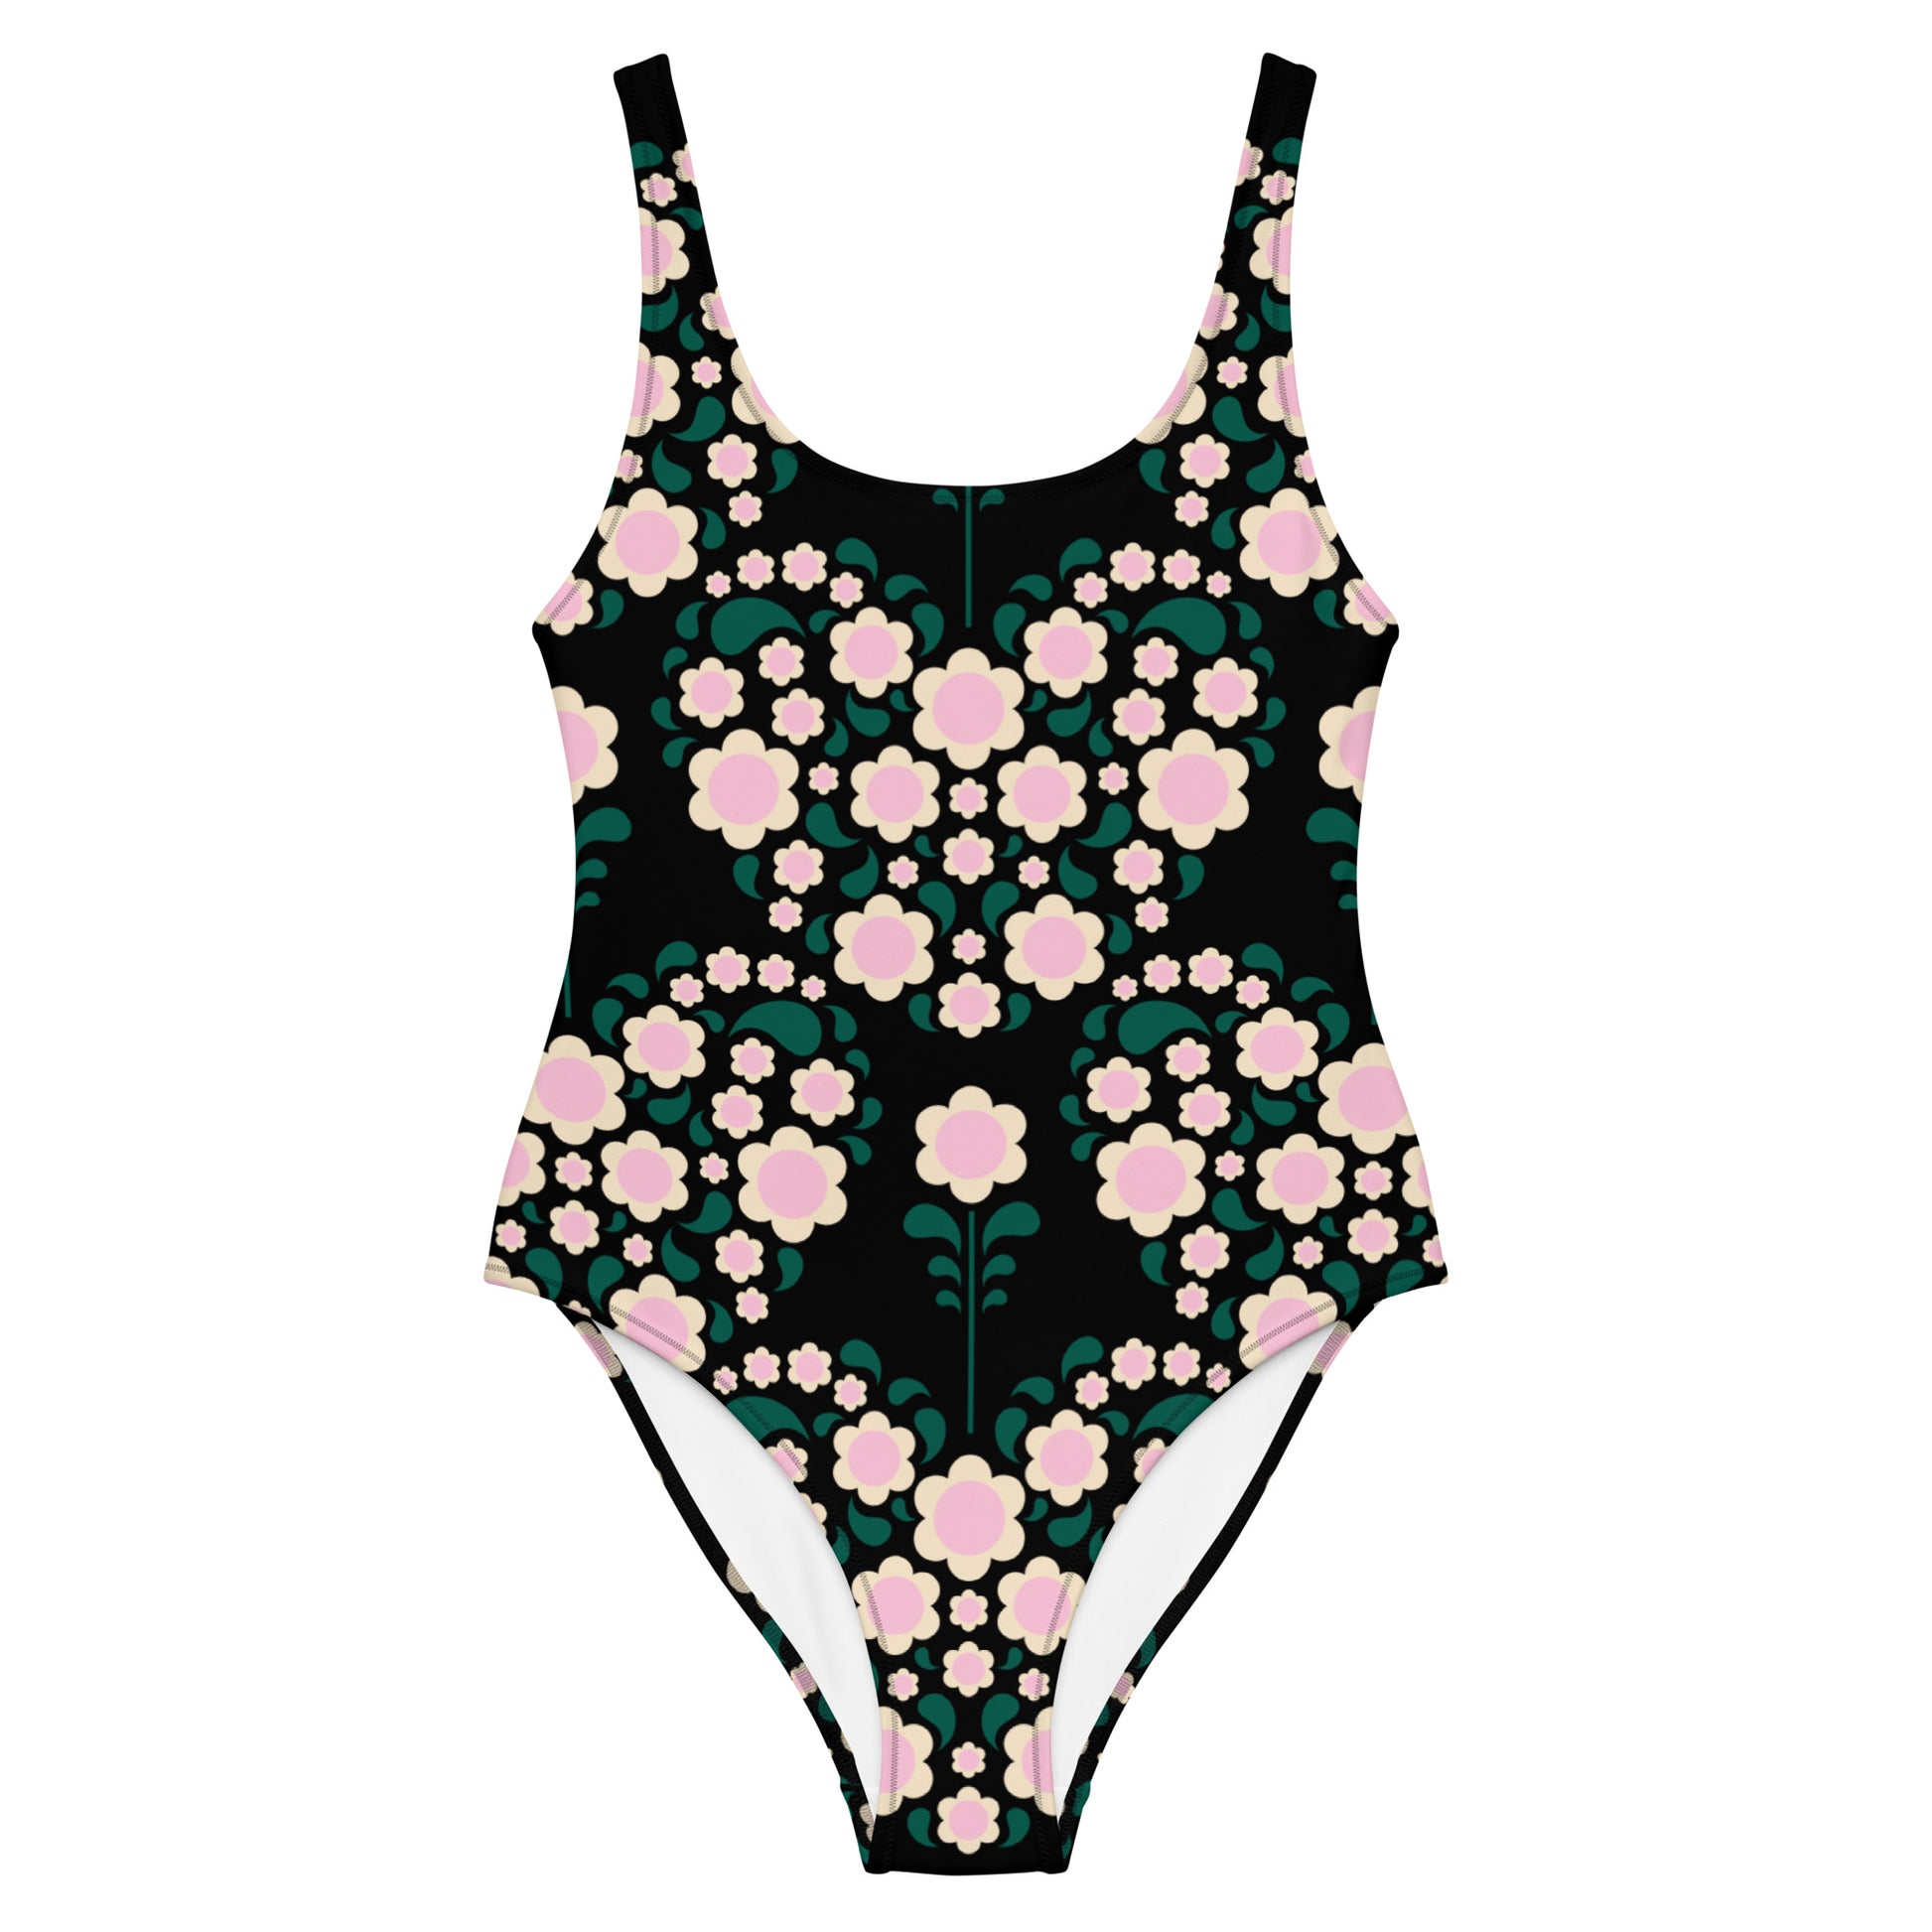 HEARTBEAT pink black - One-Piece Swimsuit